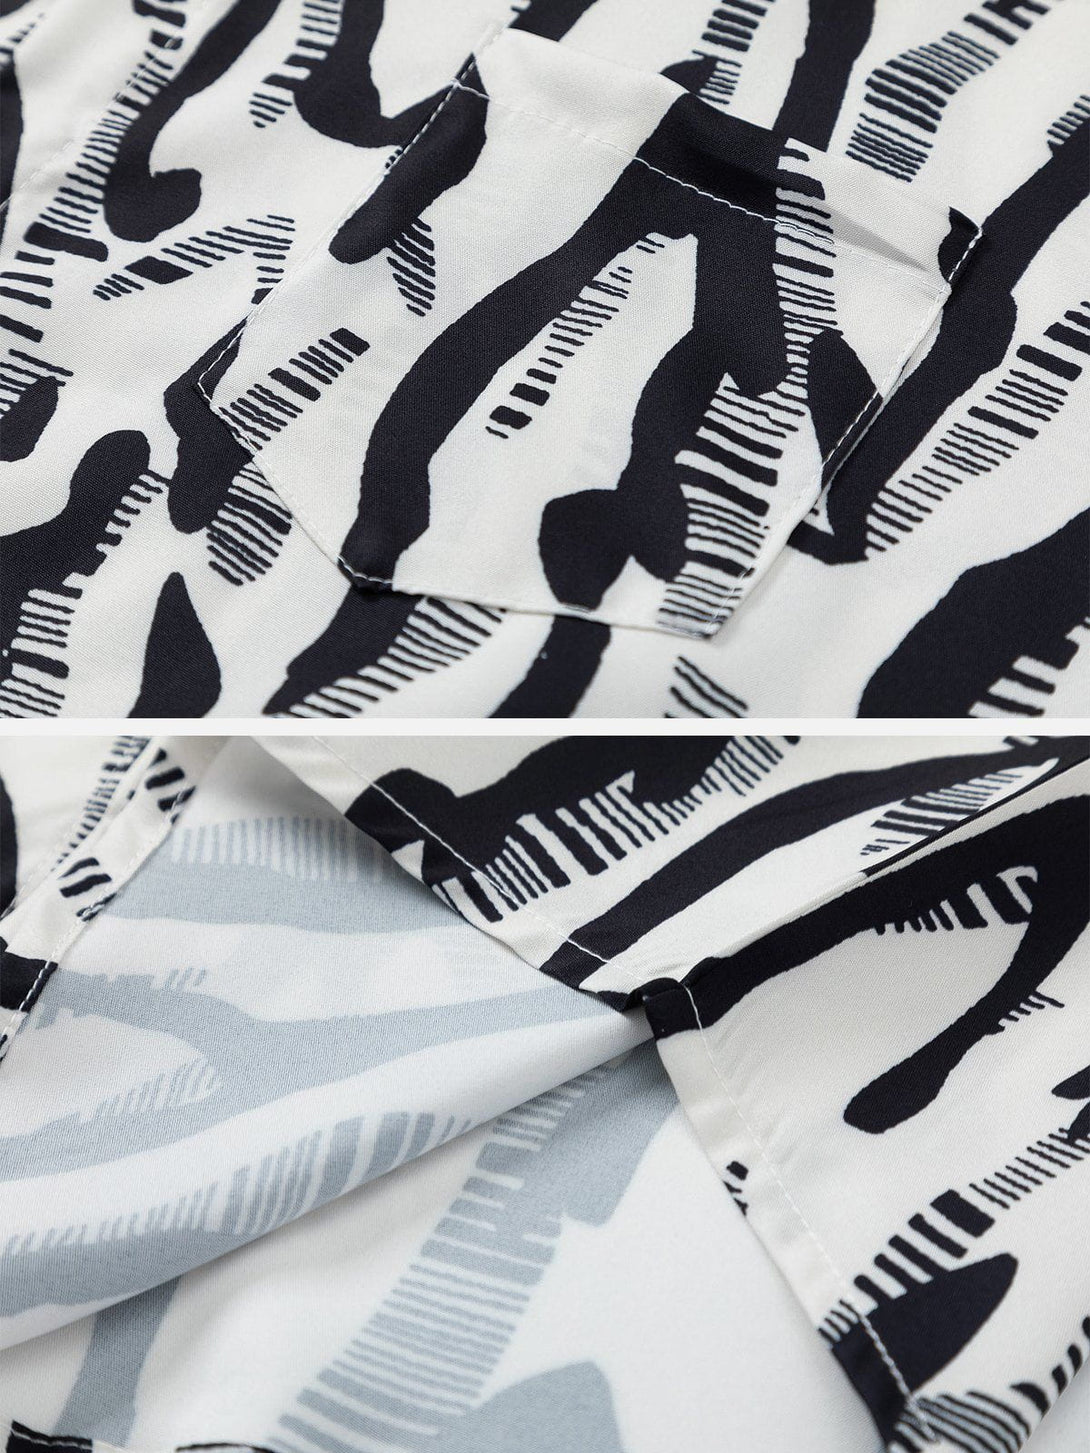 Majesda® - Zebra-stripe Short Sleeve Shirt outfit ideas streetwear fashion